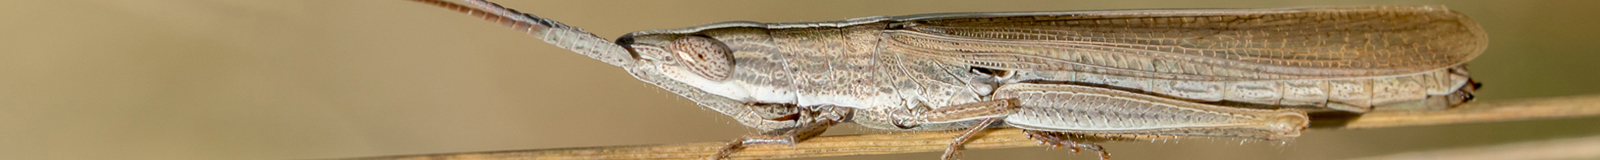 Brachycrotaphus tryxalicerus